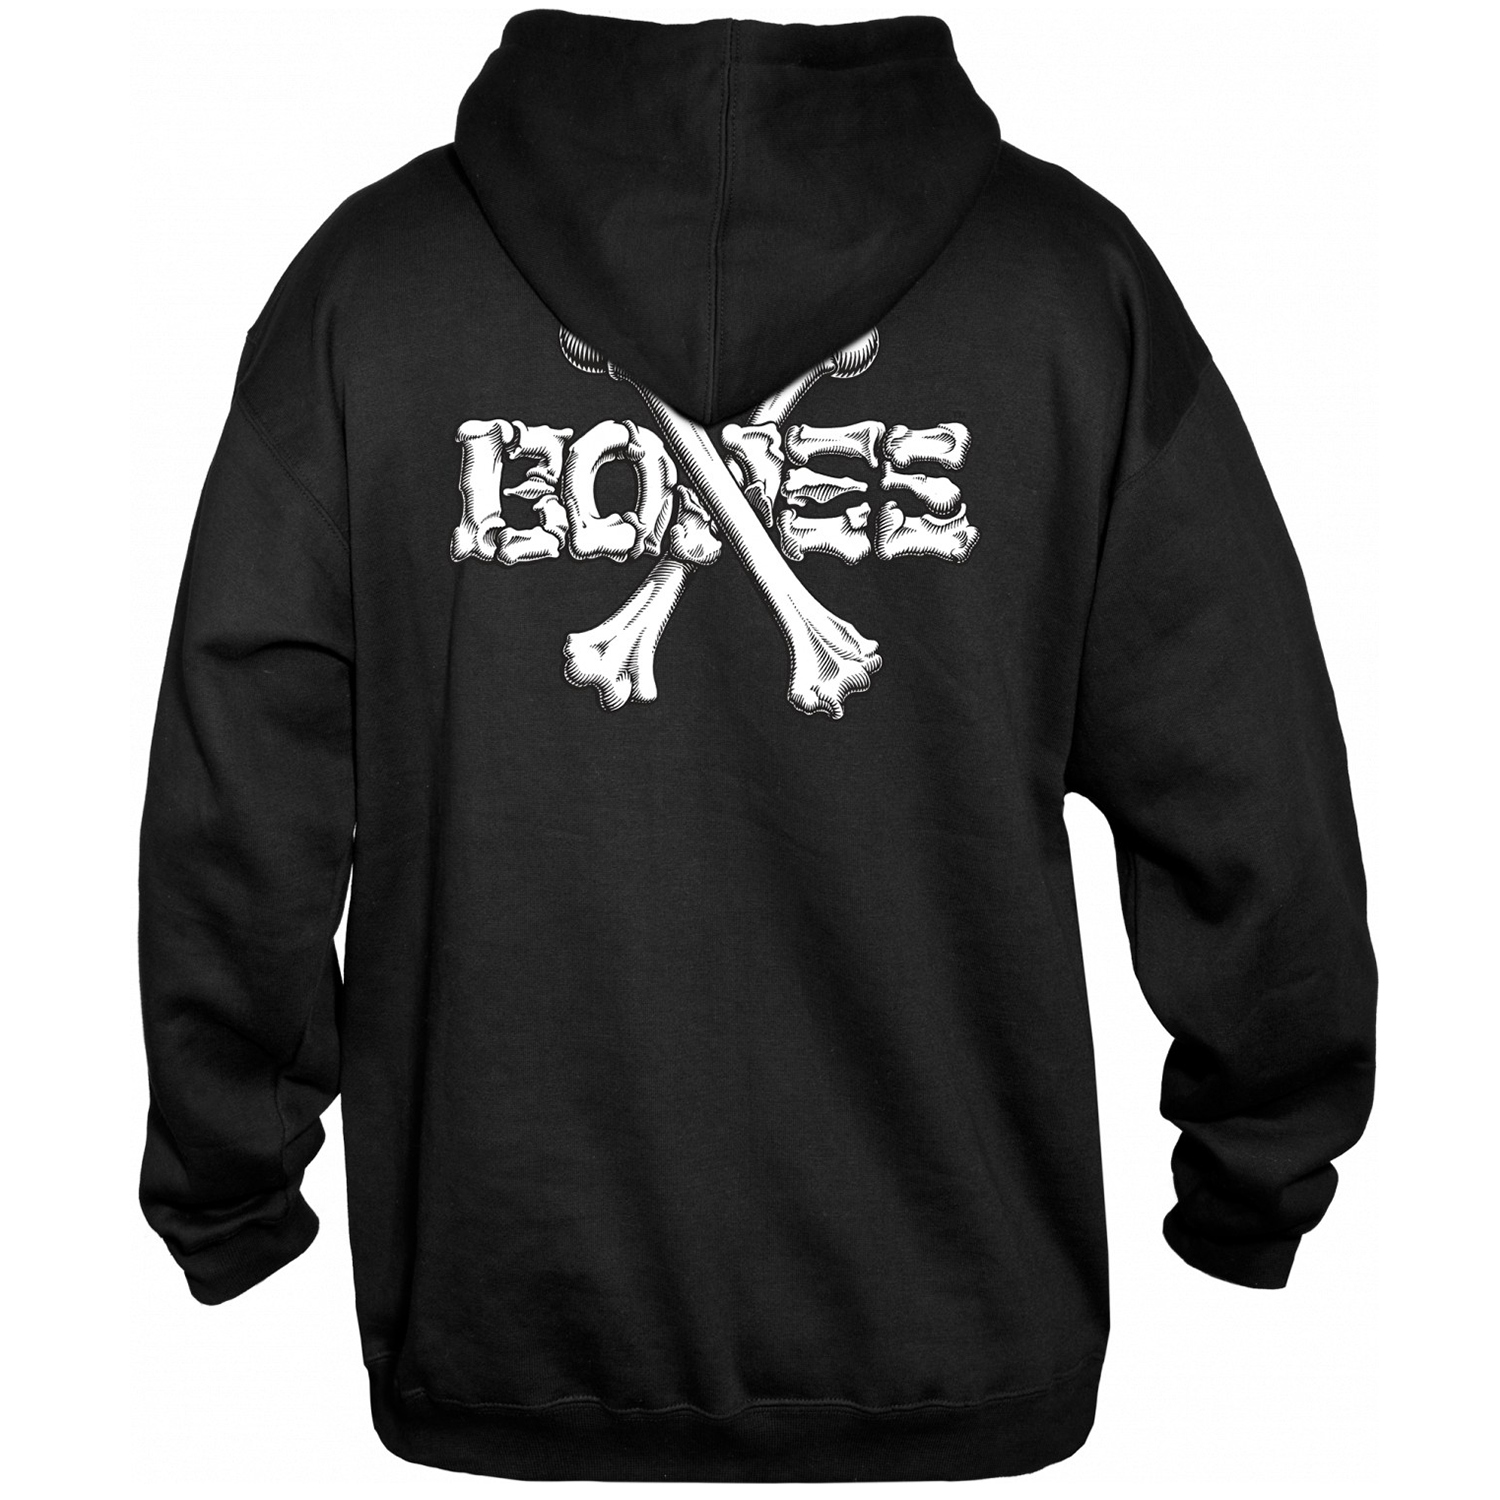 Capucha Bones - Cross Bones